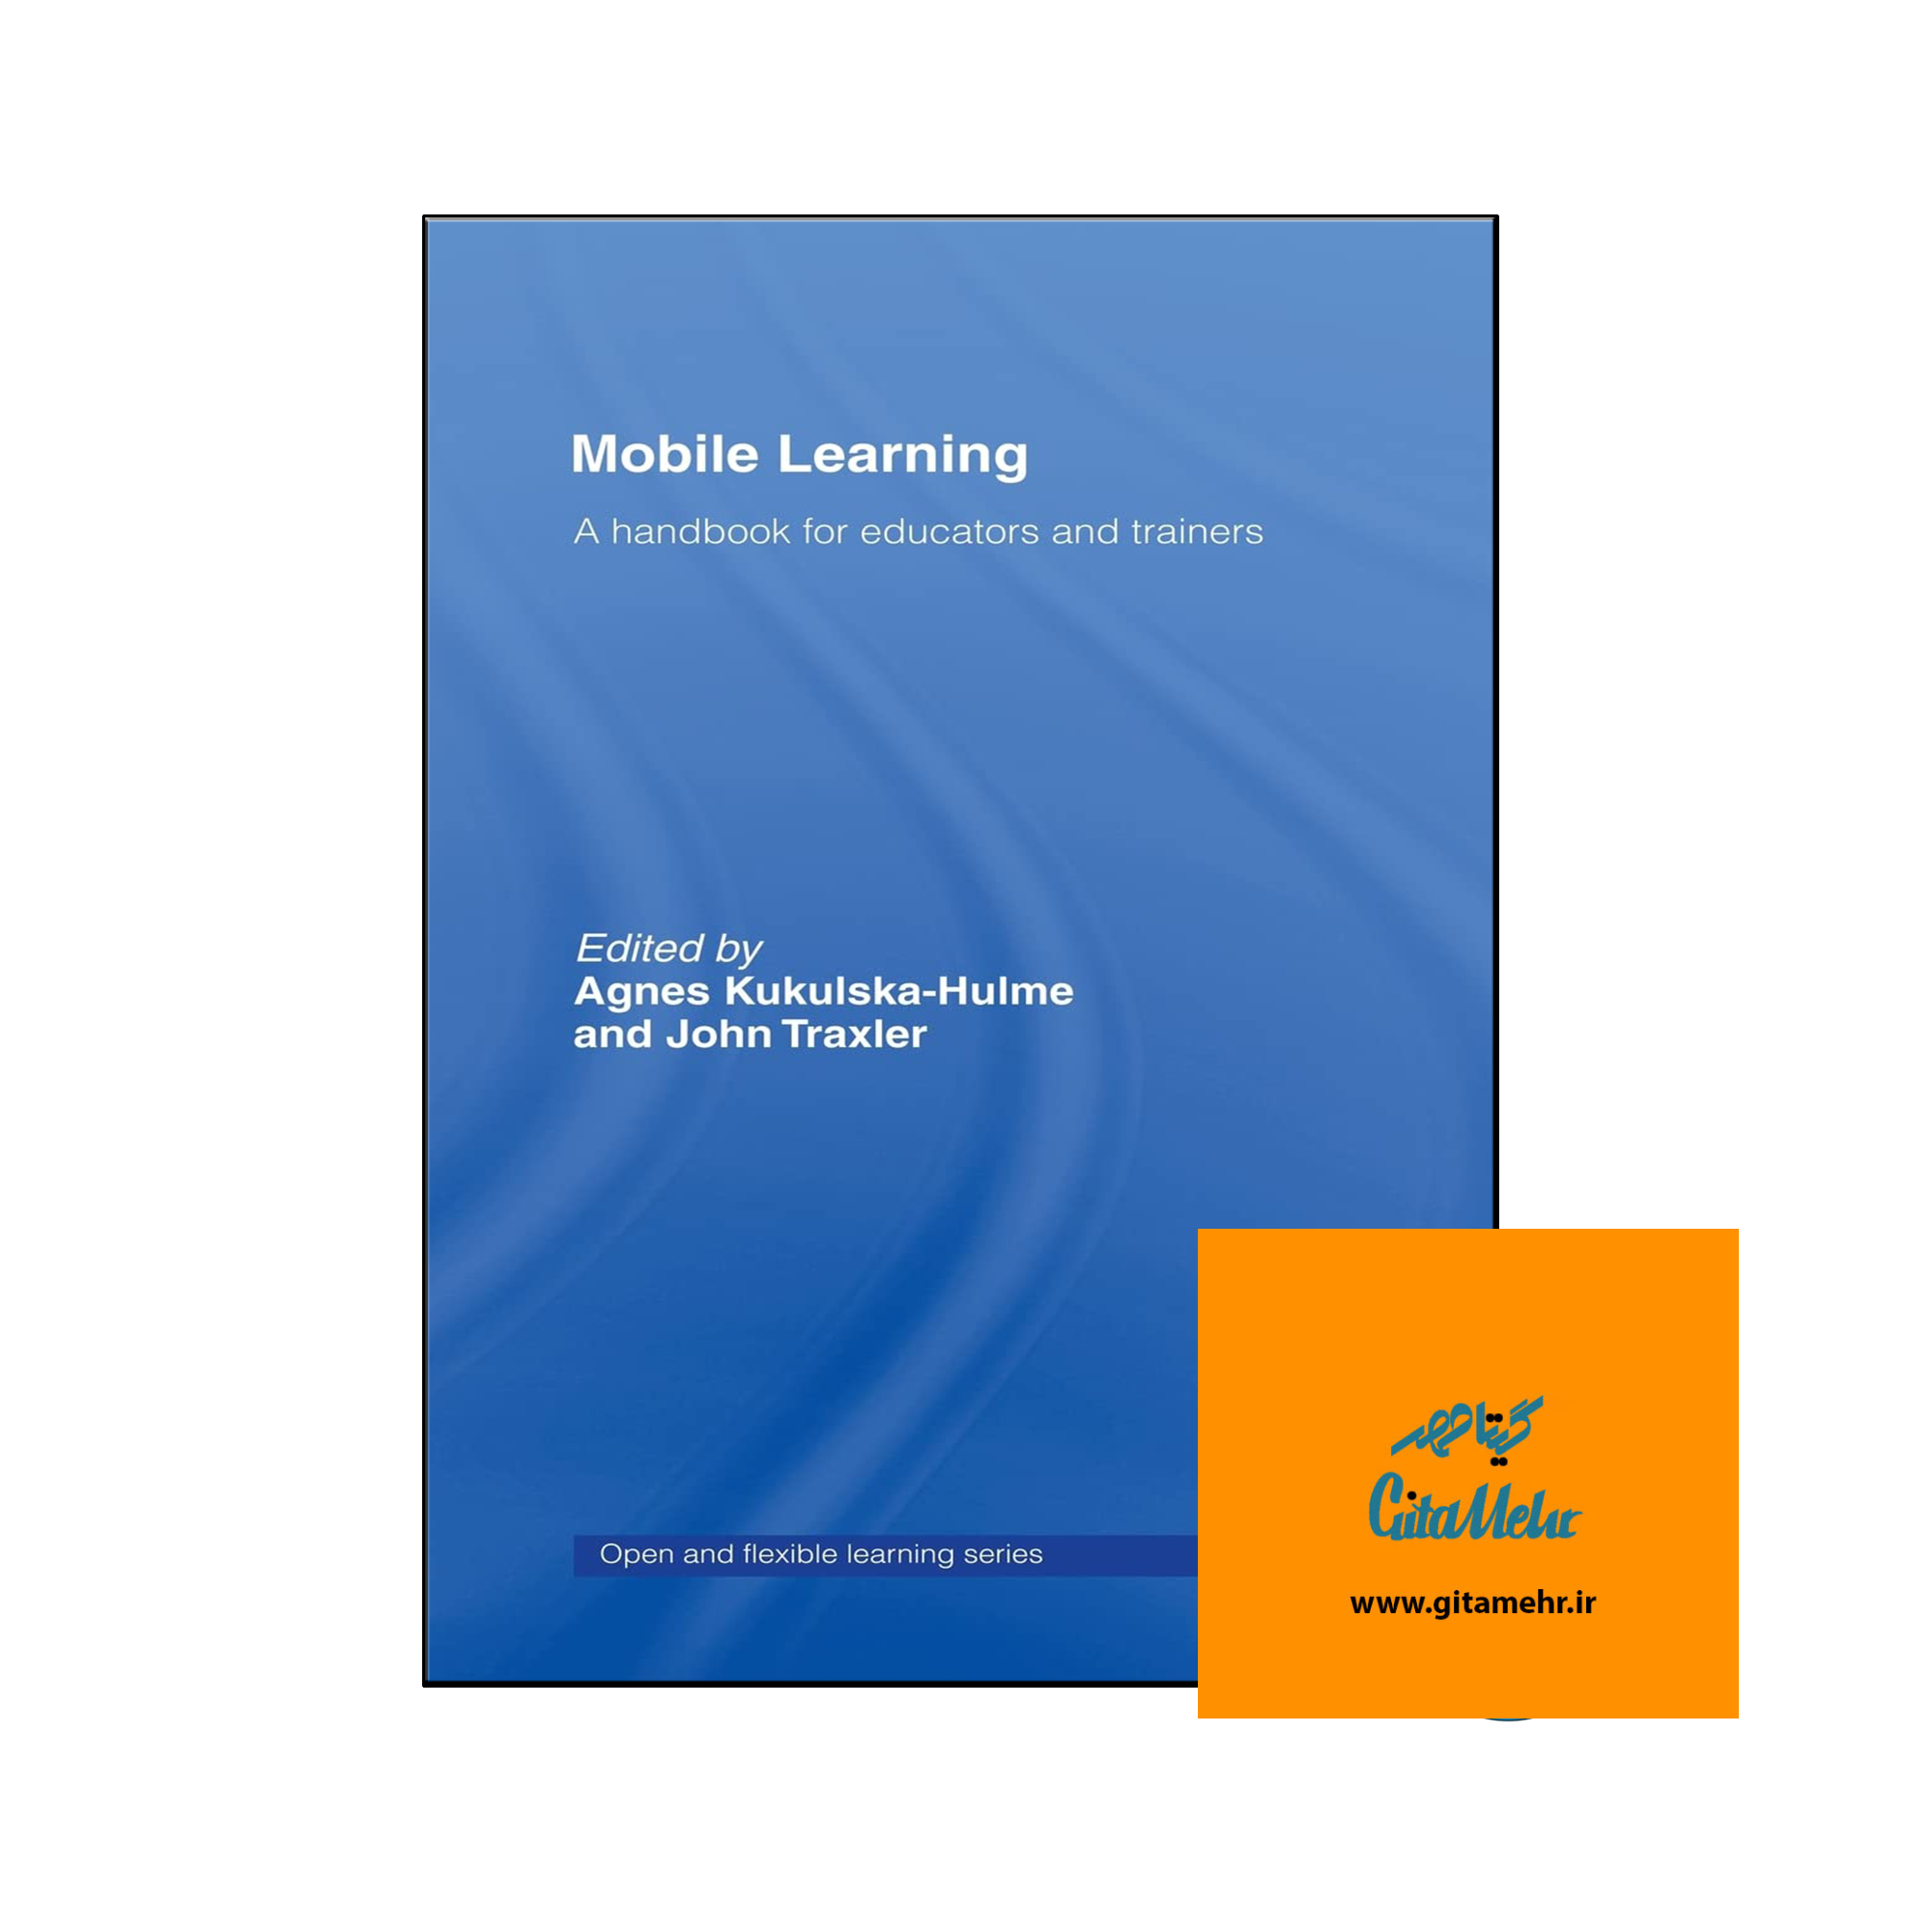 daa9d8aad8a7d8a8 mobile learning a handbook for educators and trainers 65ecafa45c0e6